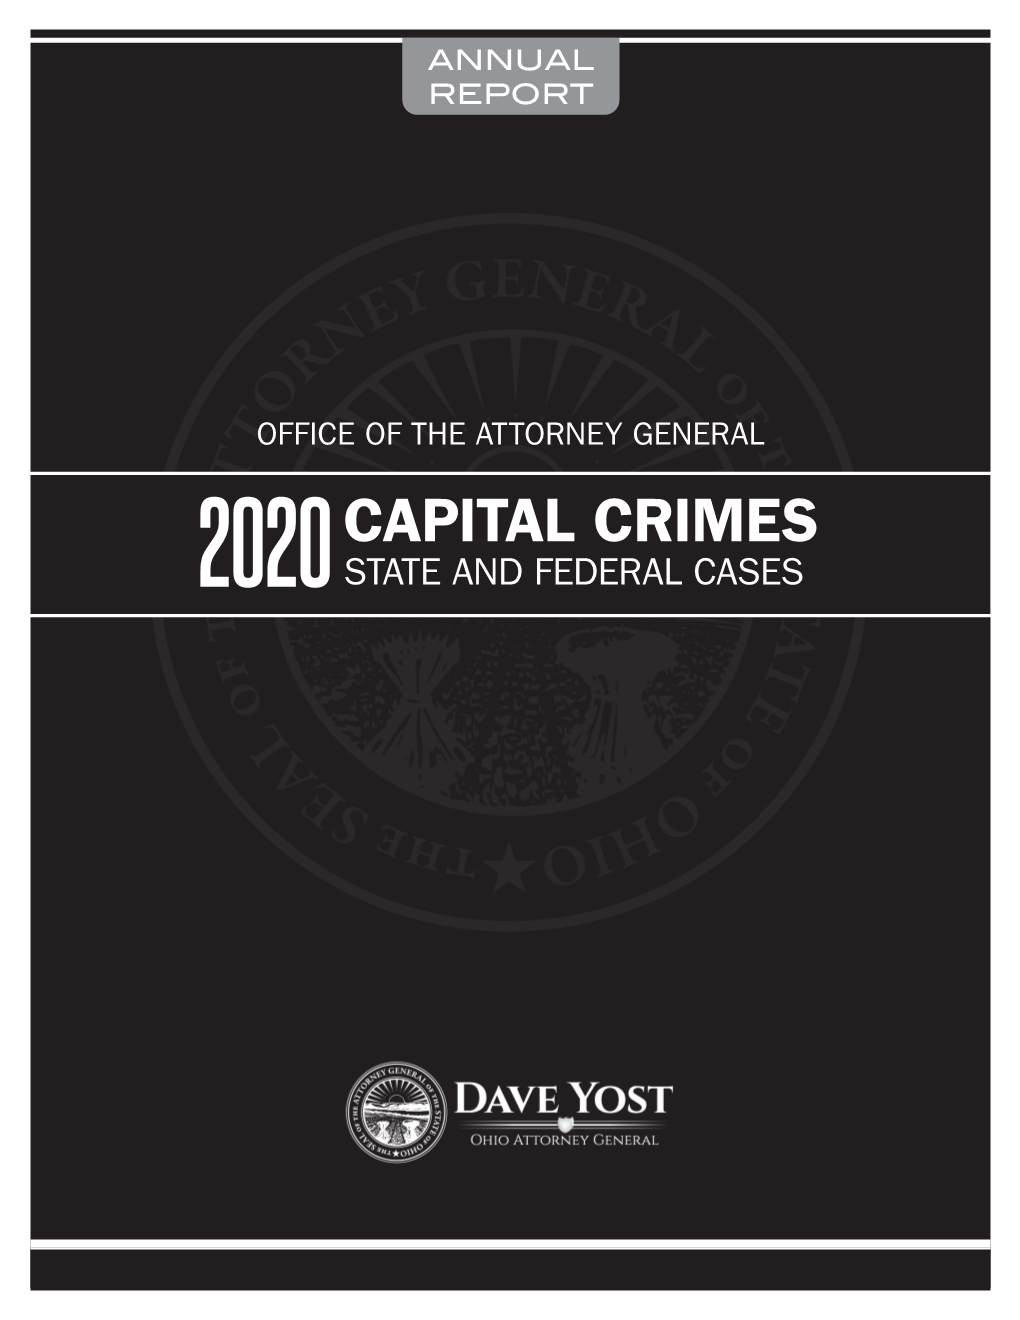 2020 Capital Crimes Annual Report